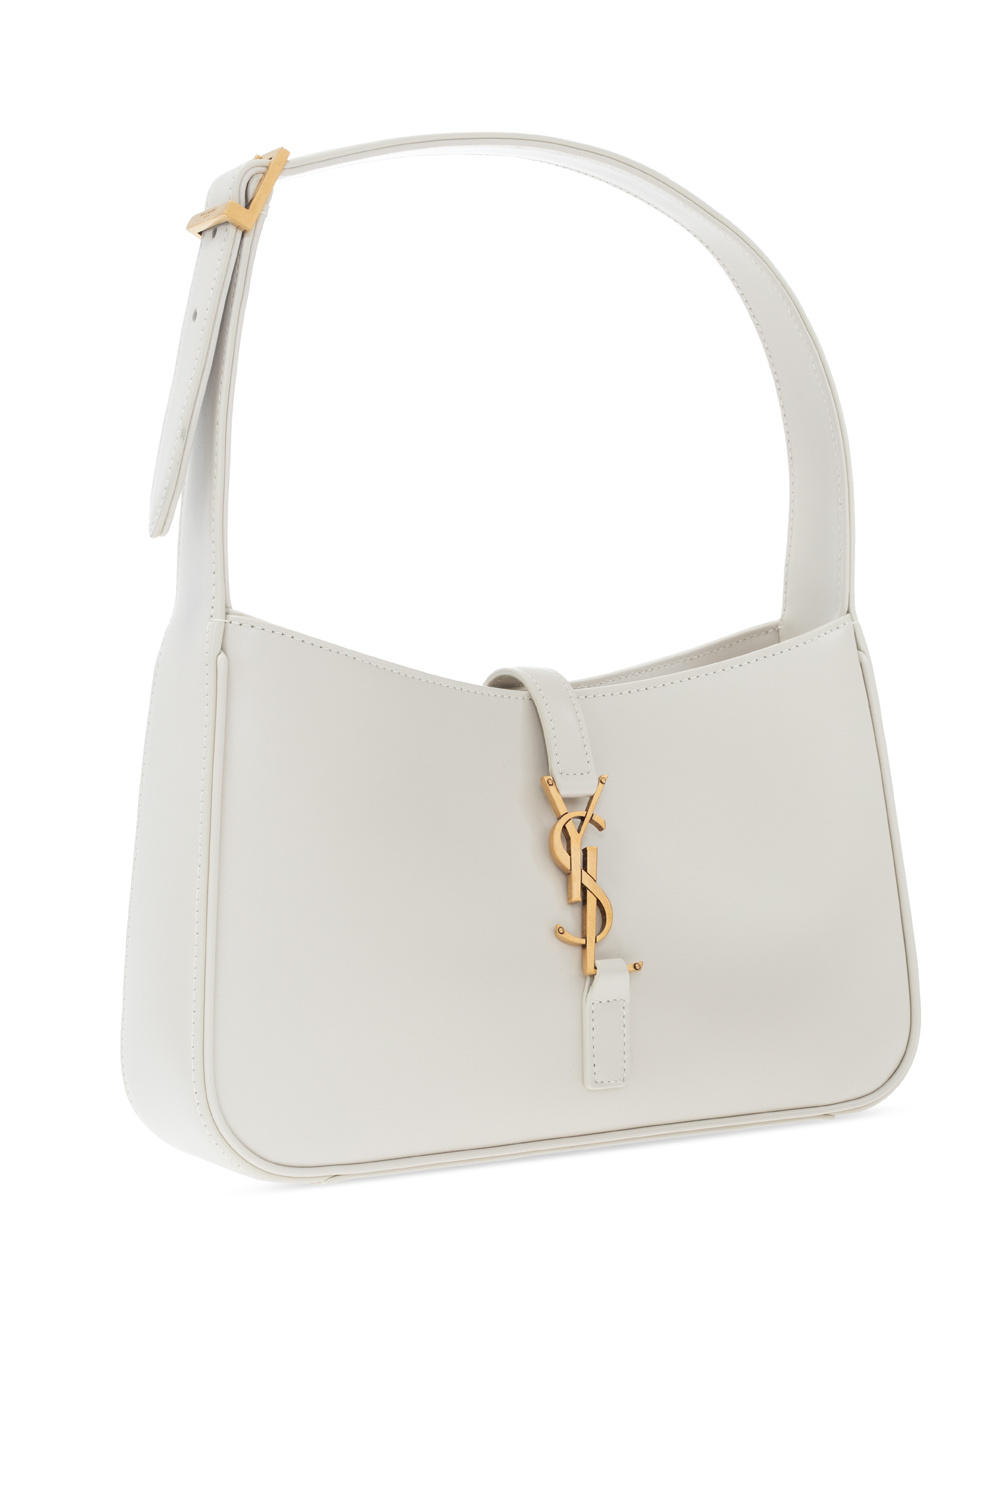 Cream 'Le 5 A 7 Mini' hobo handbag Saint Laurent - Vitkac TW